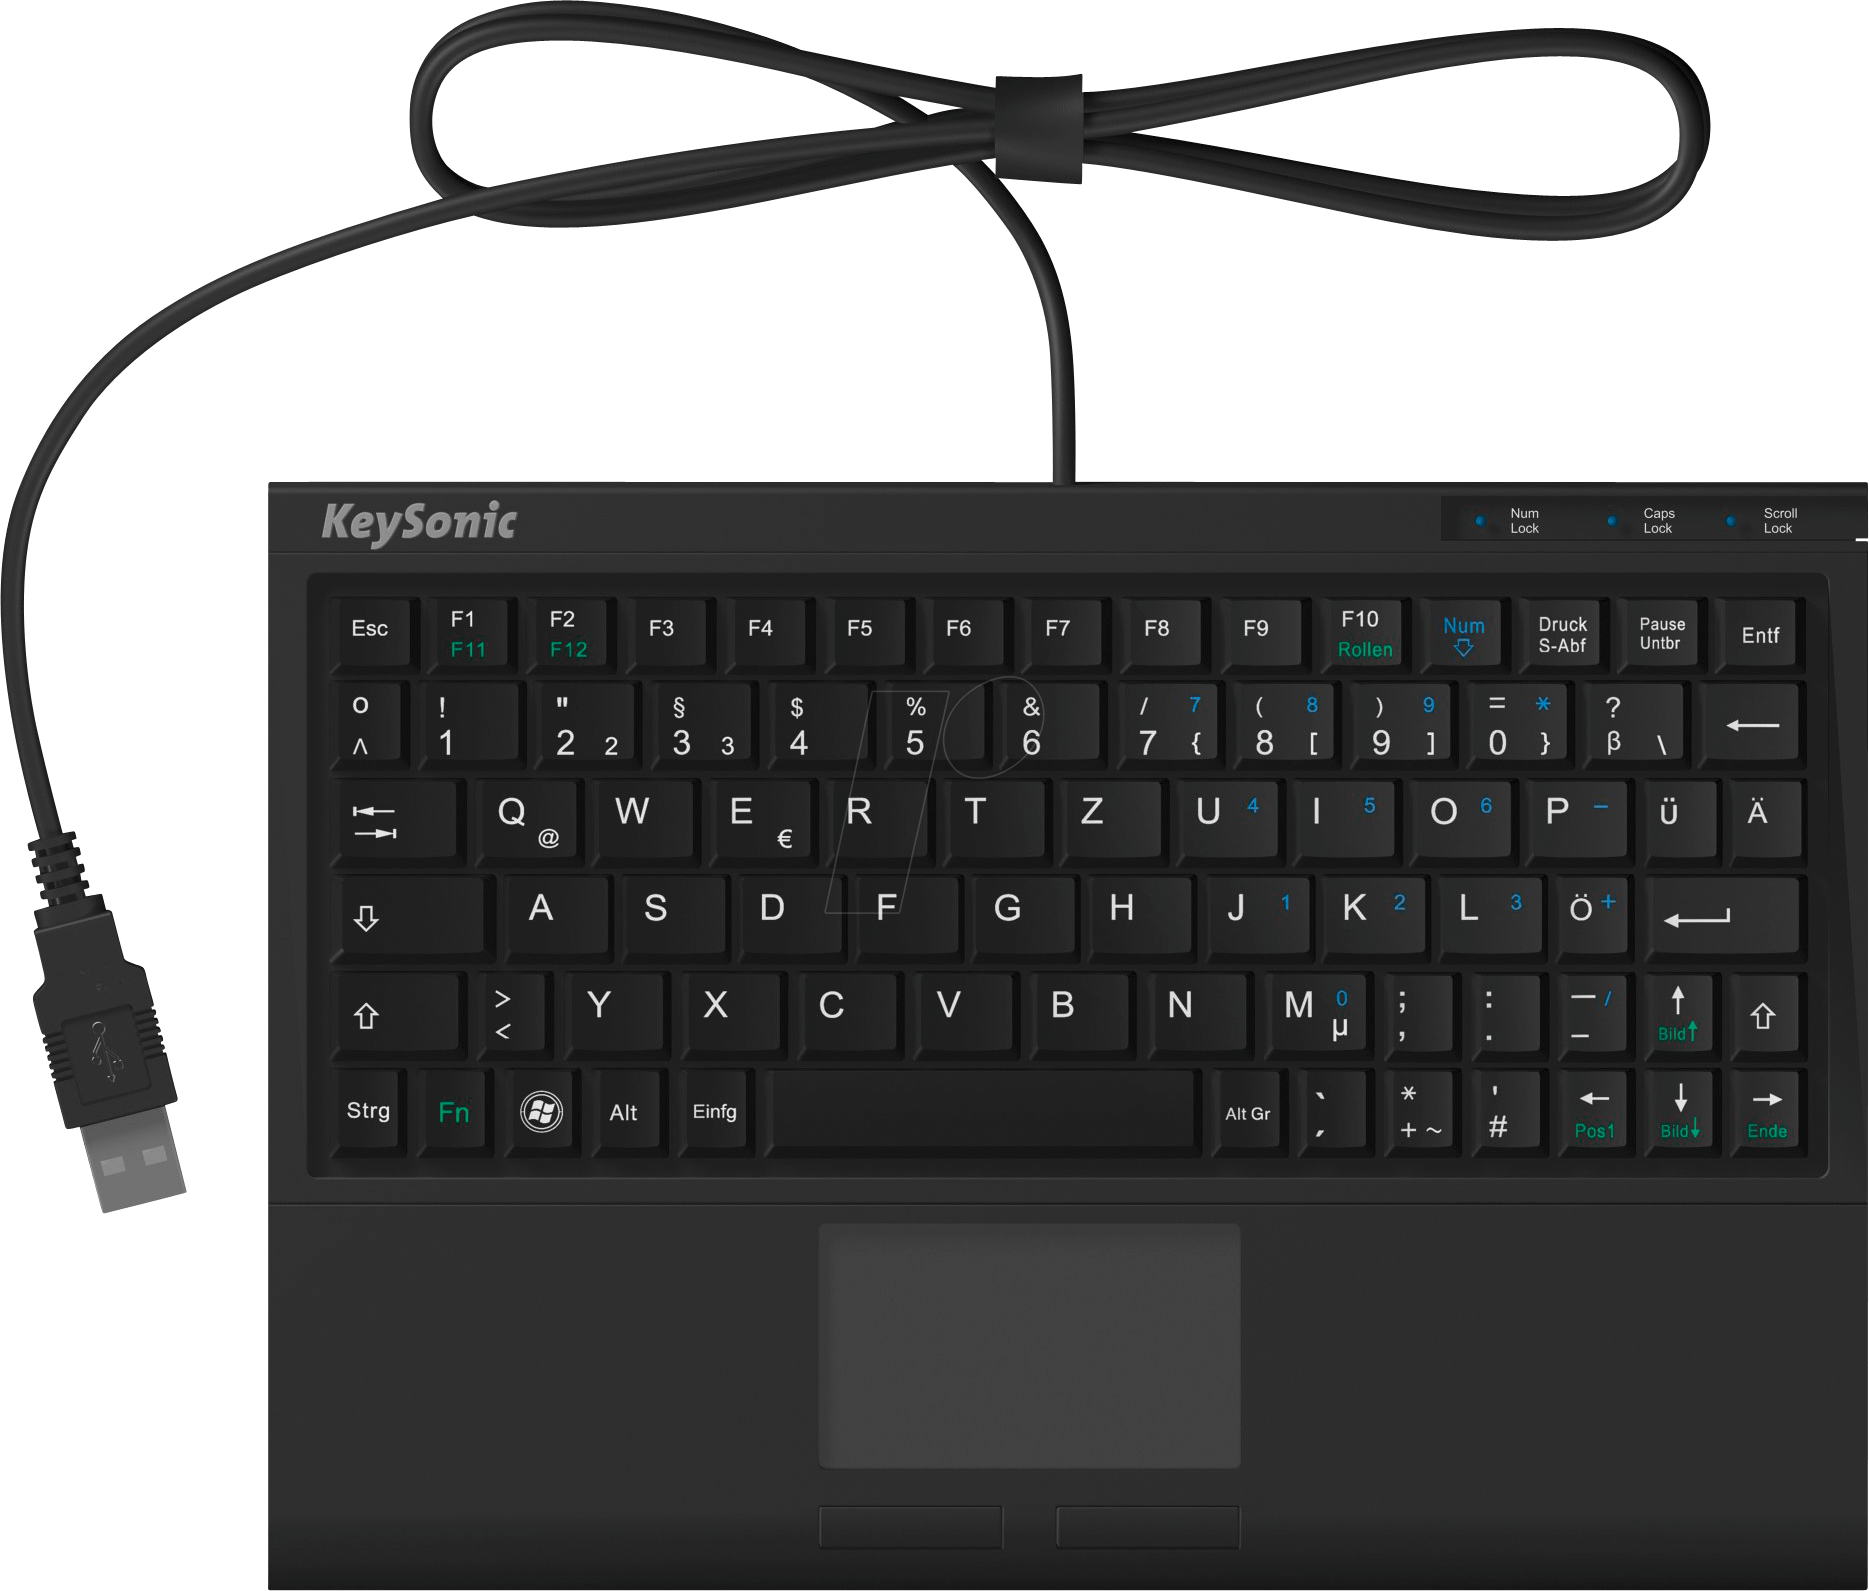 KEYSON ACK3410 - Tastatur, USB, schwarz, mini von Keysonic